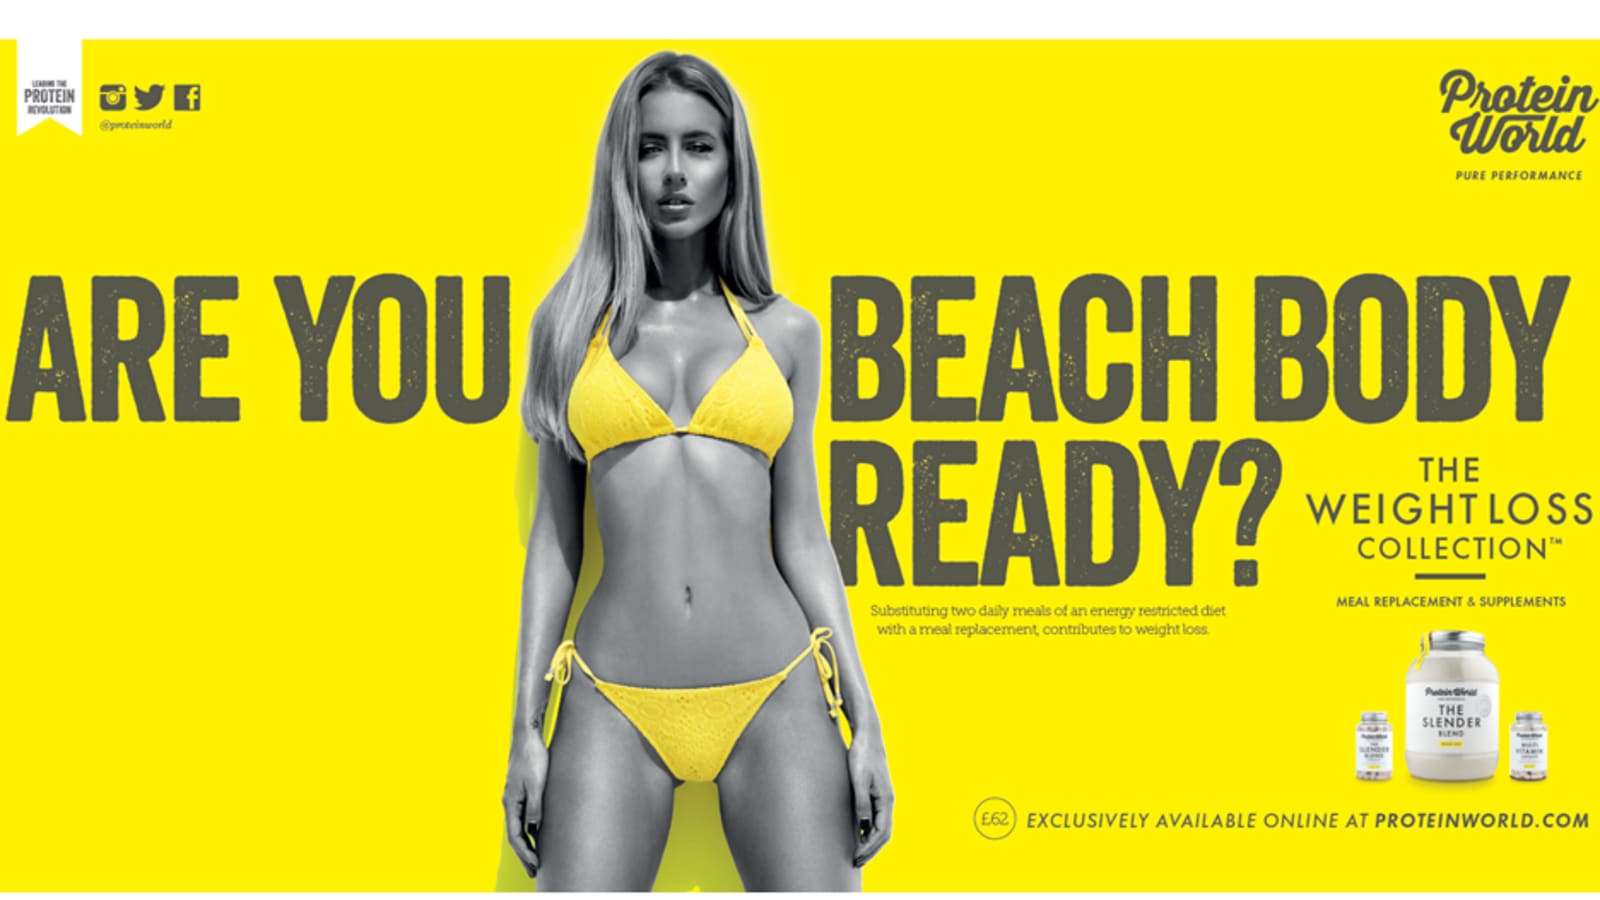 Protein World&#39;s Beach Body Ready ad &#39;not offensive&#39;: Watchdog